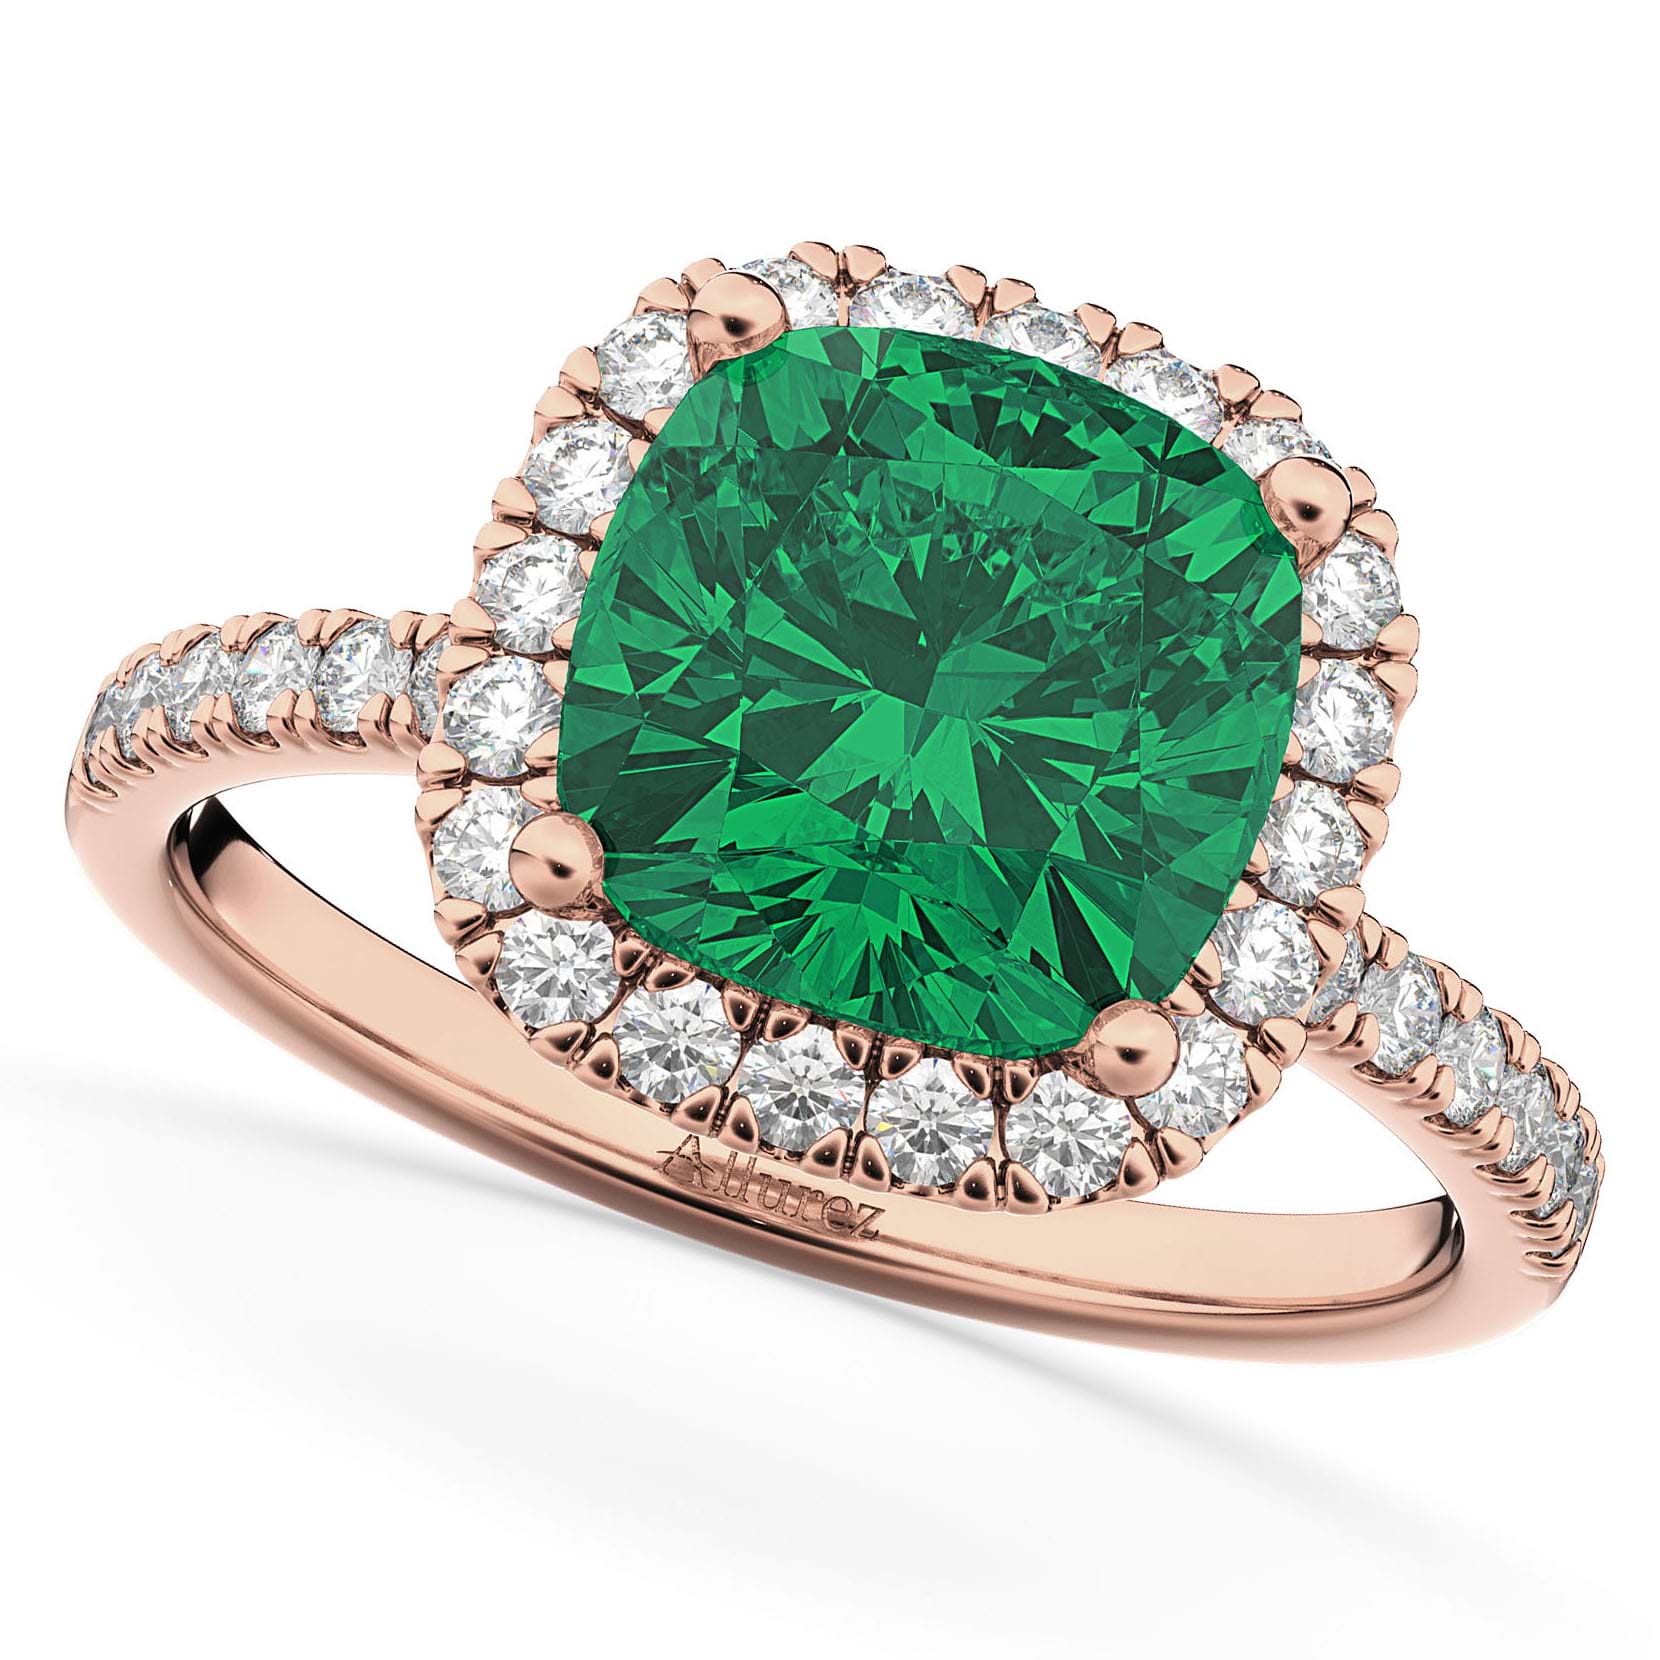 Cushion Cut Halo Emerald & Diamond Engagement Ring 14k Rose Gold (3.11ct)